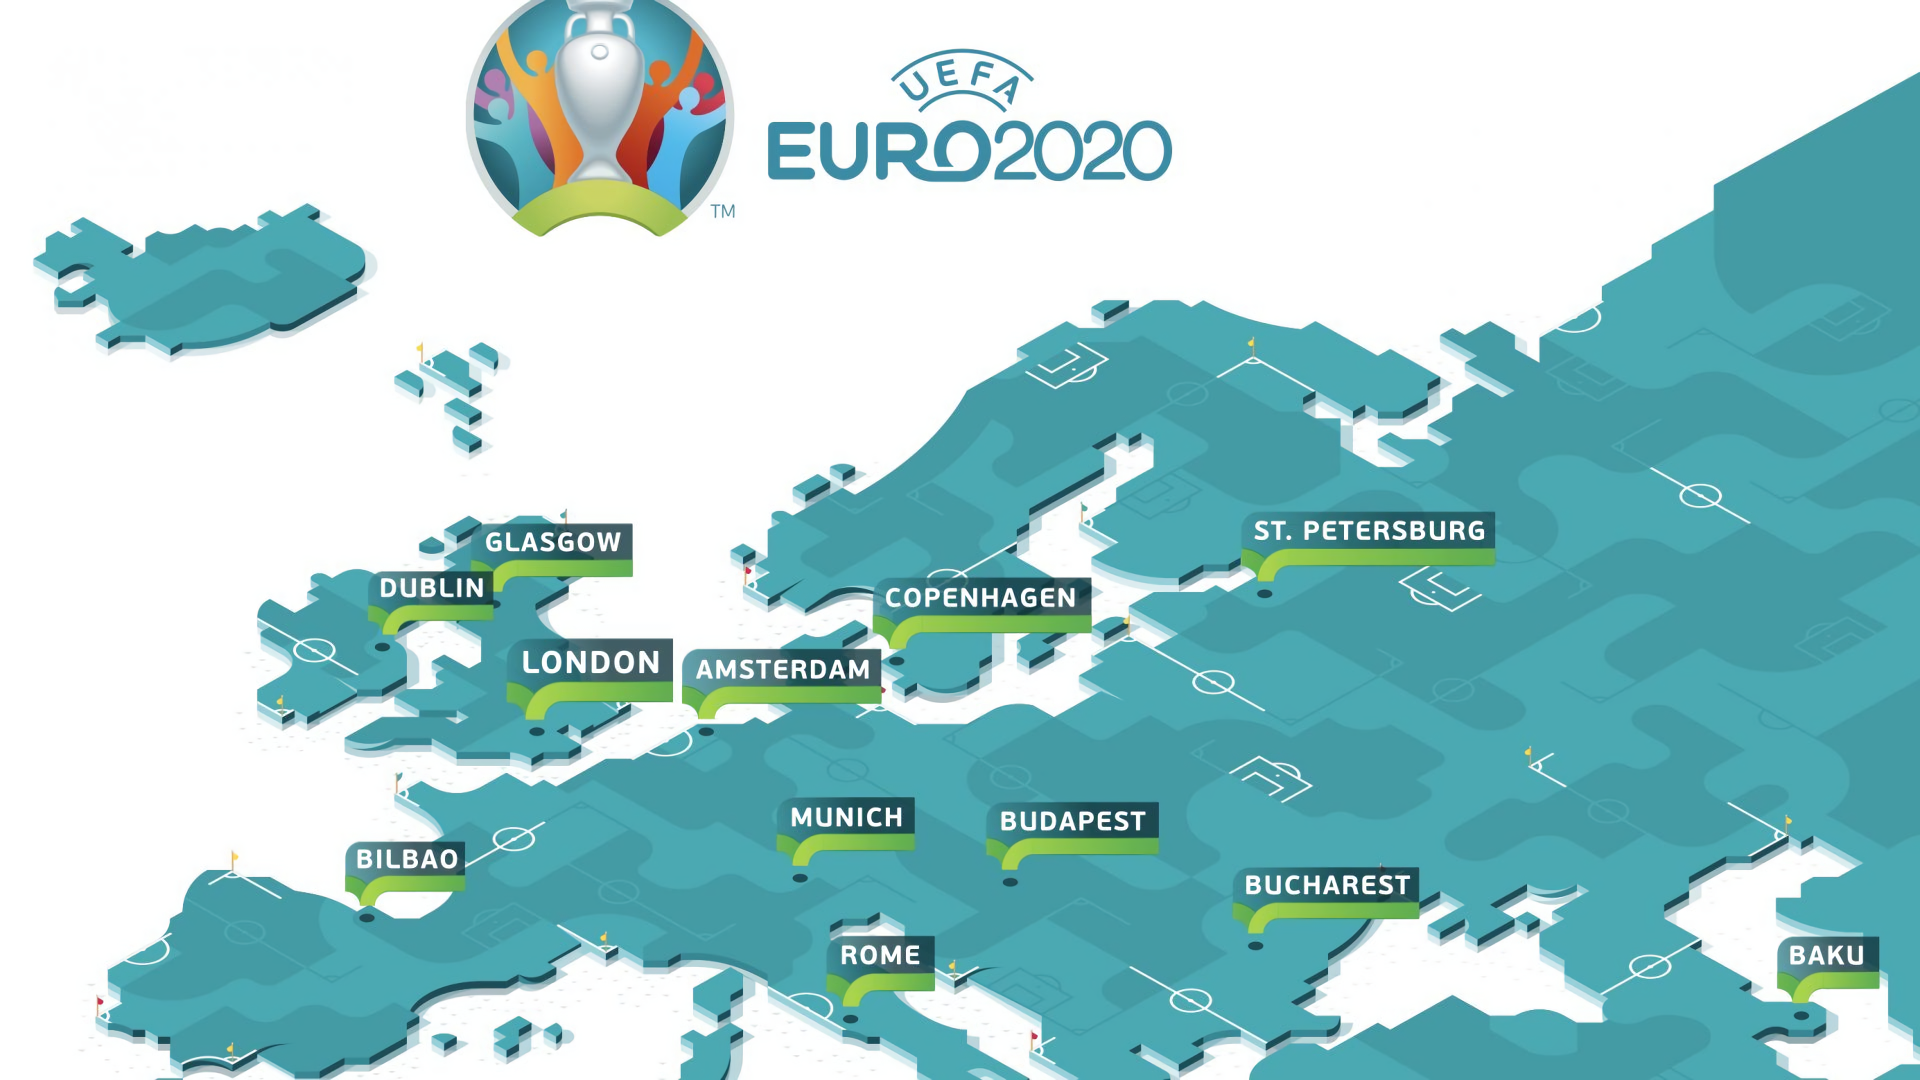 Uefa Euro 2020 Wallpapers